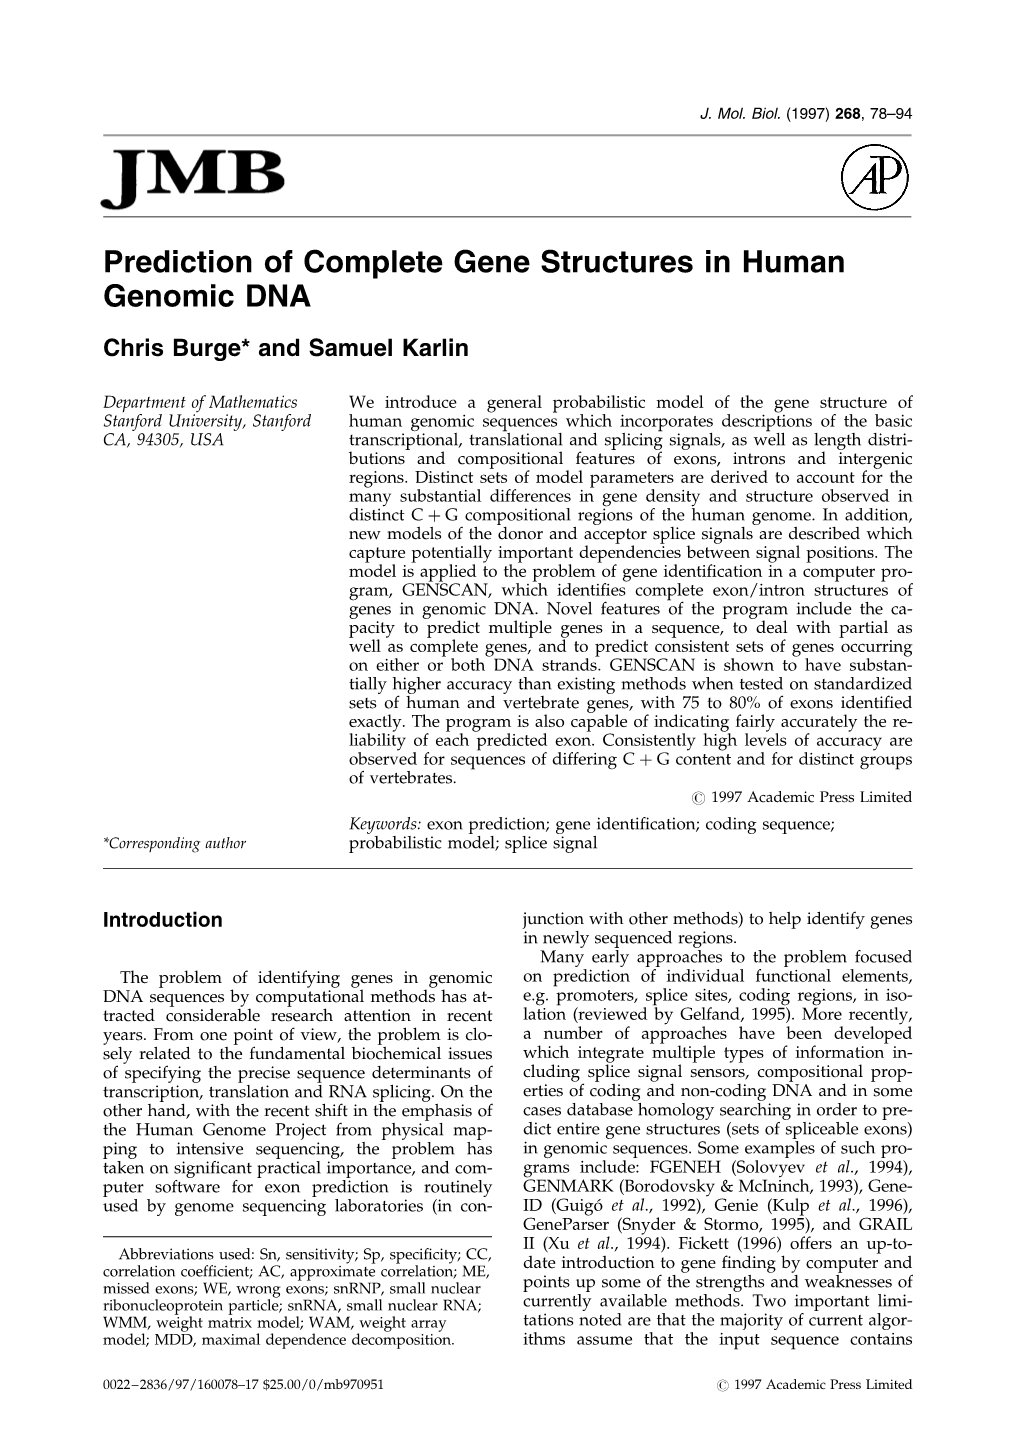 Prediction of Complete Gene Structures in Human Genomic DNA